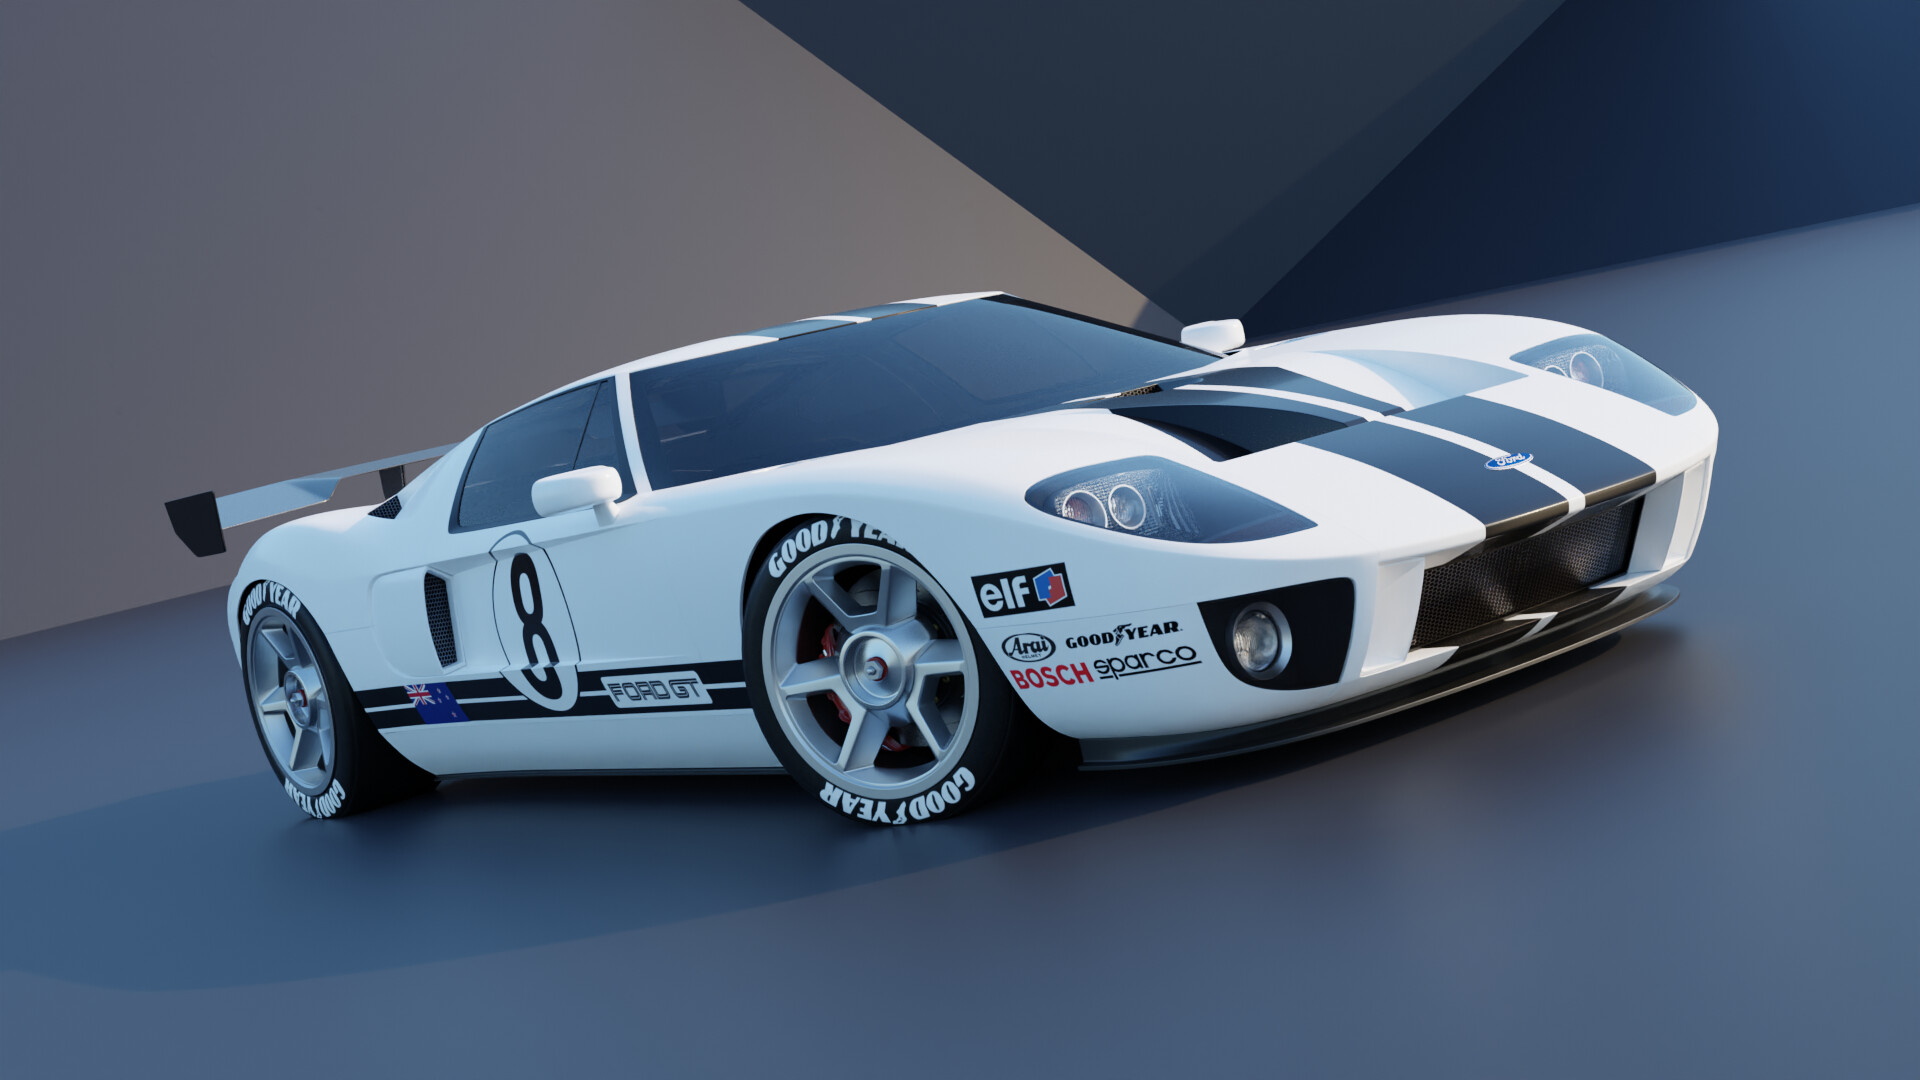 Gran Turismo Ford GT LM Spec II Test Car